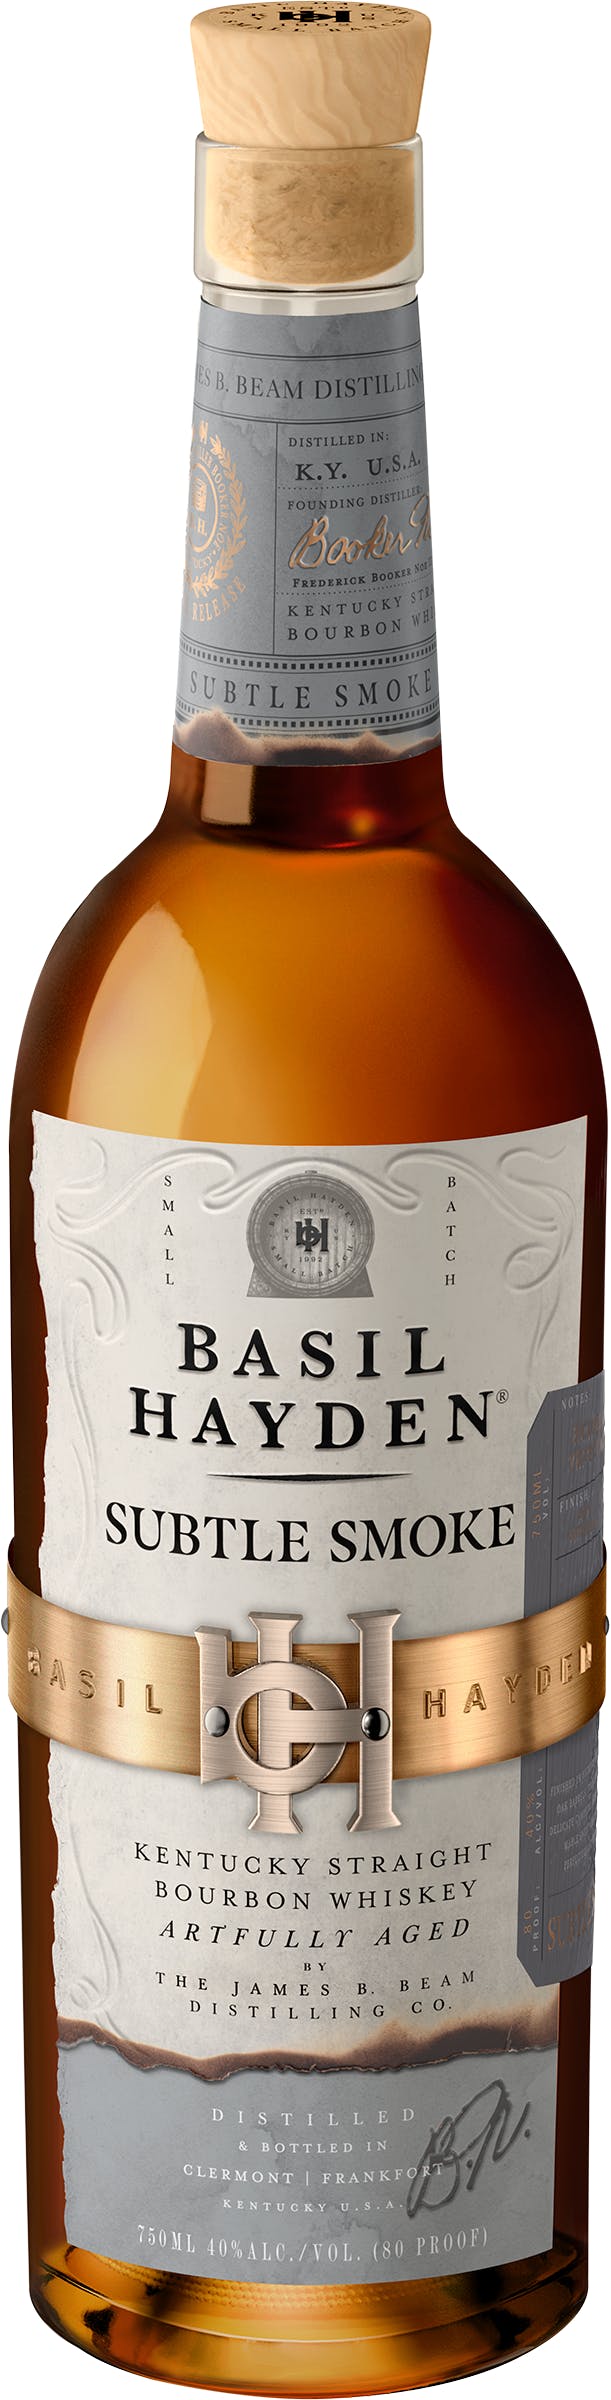 Basil Hayden's Subtle Smoke Bourbon